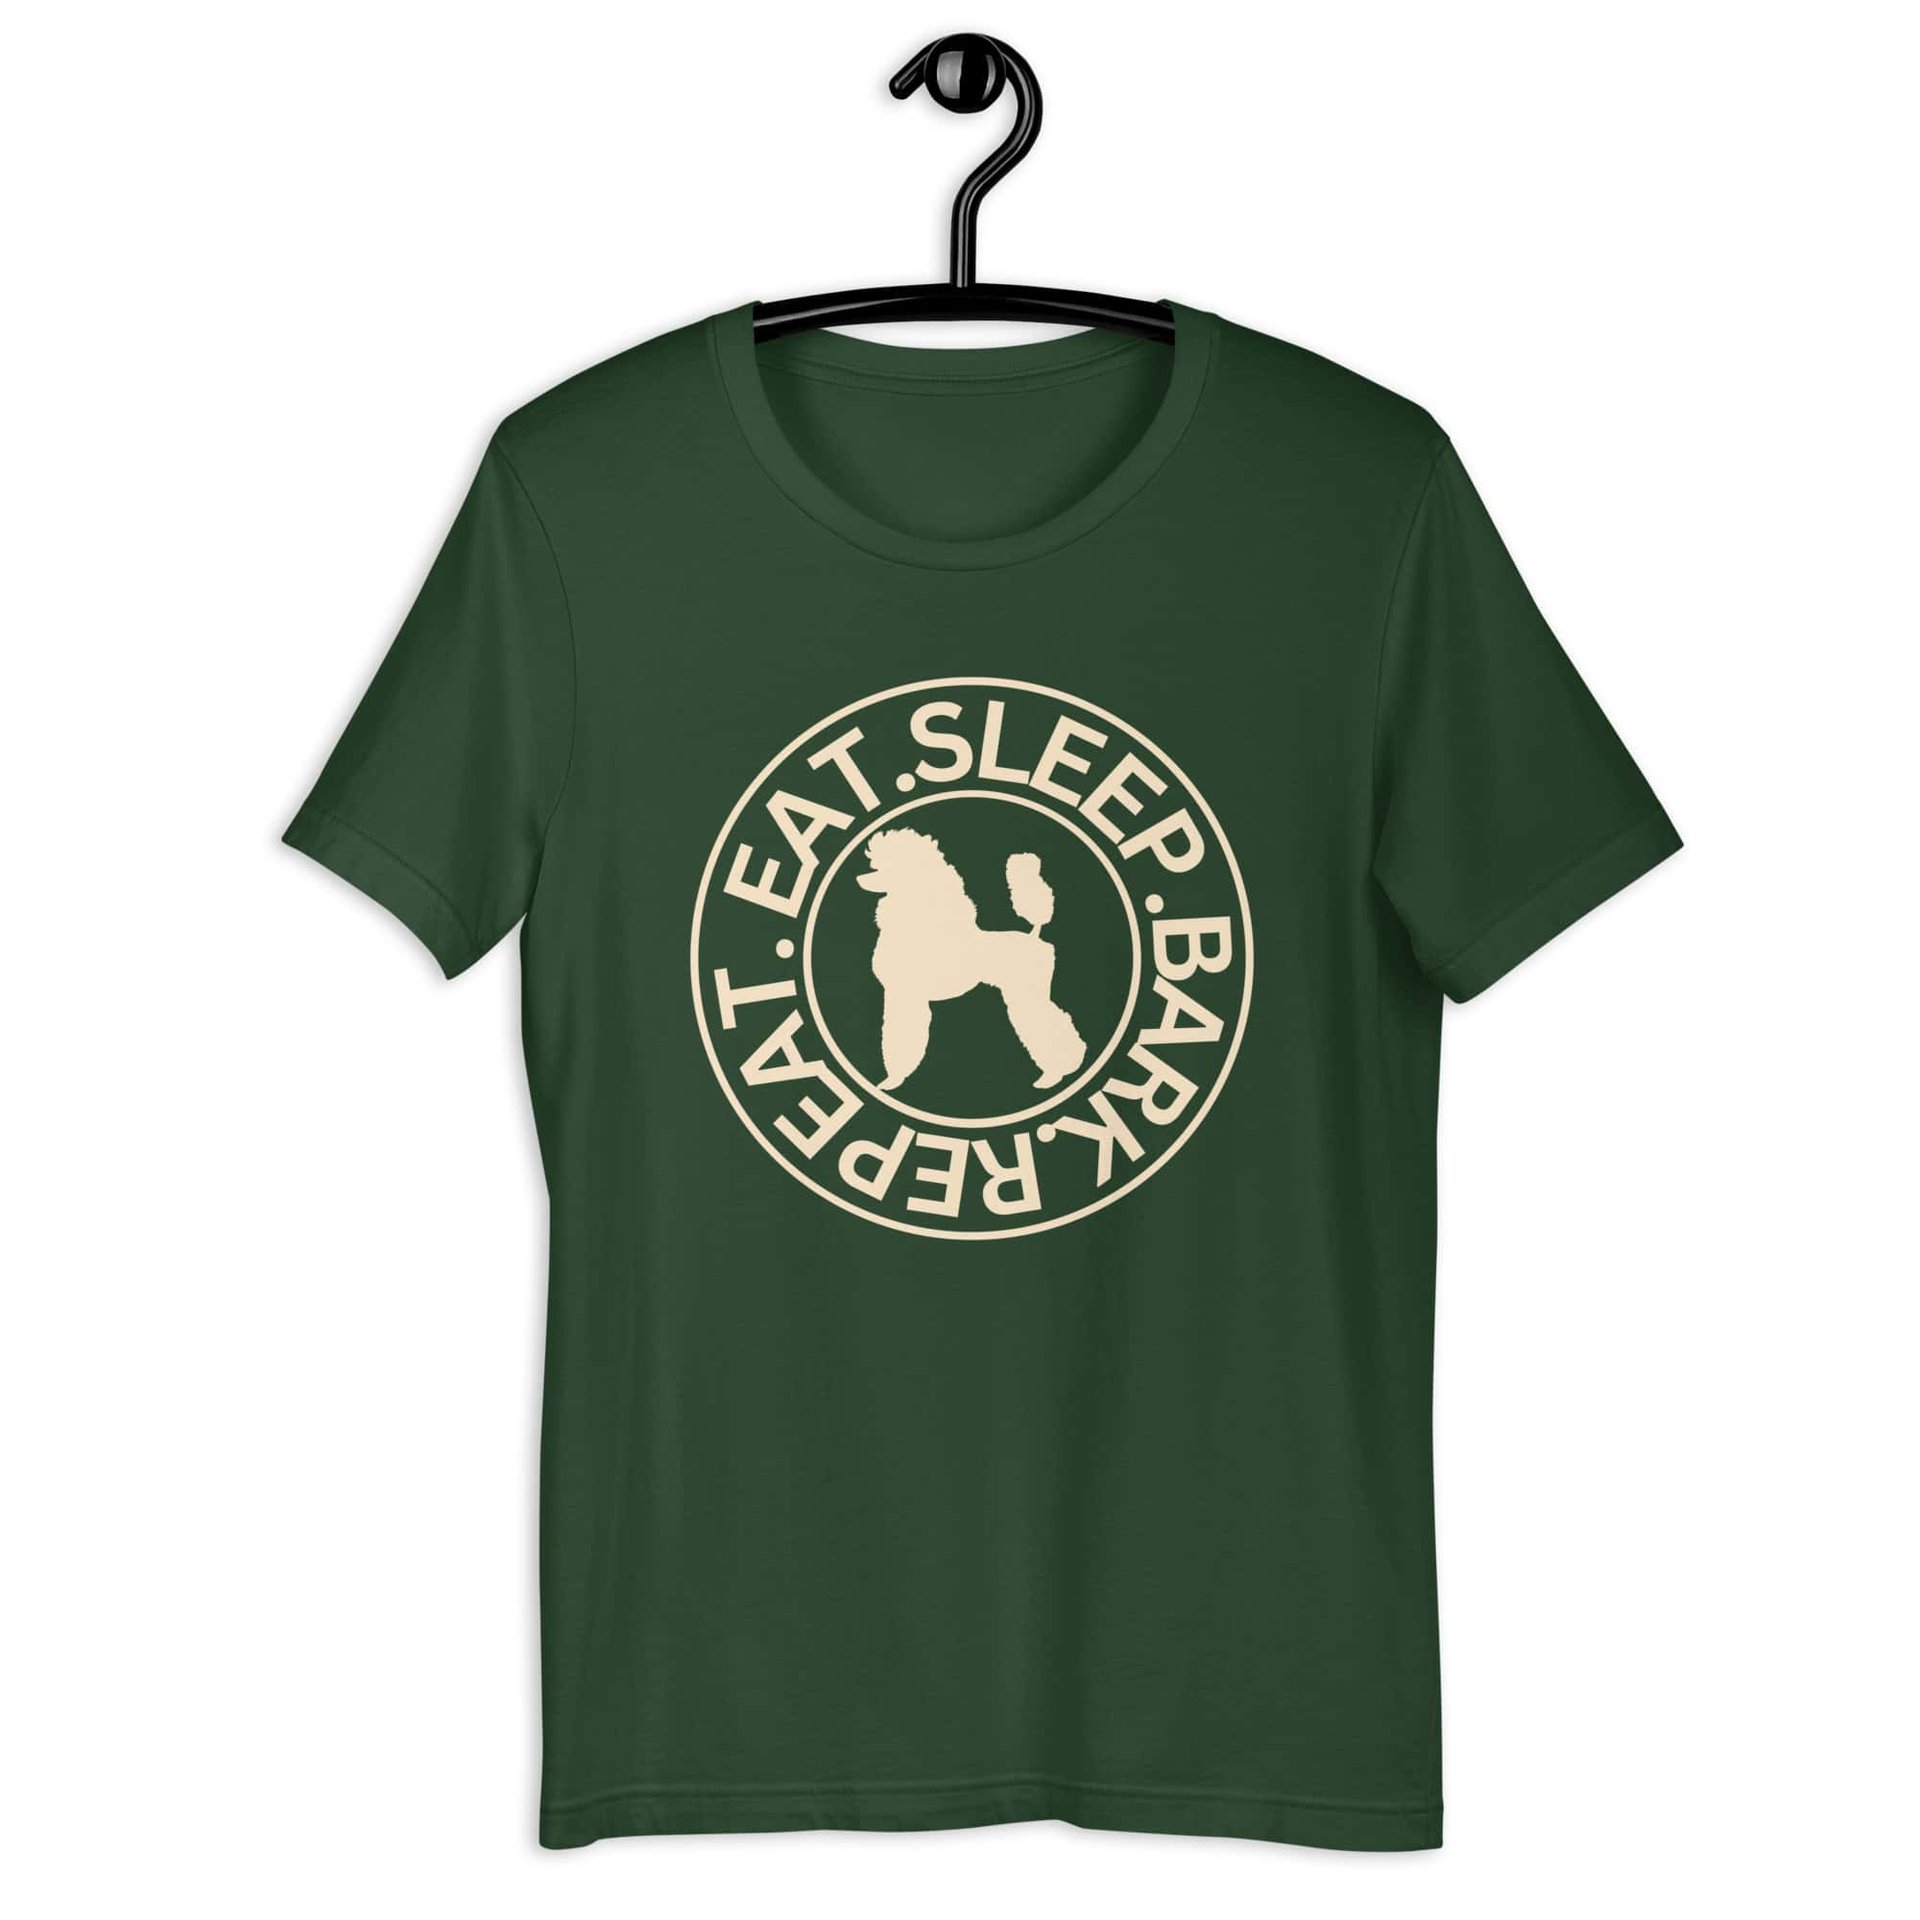 Eat Sleep Repeat Bark Miniature Poodle Unisex T-Shirt. Forest Green